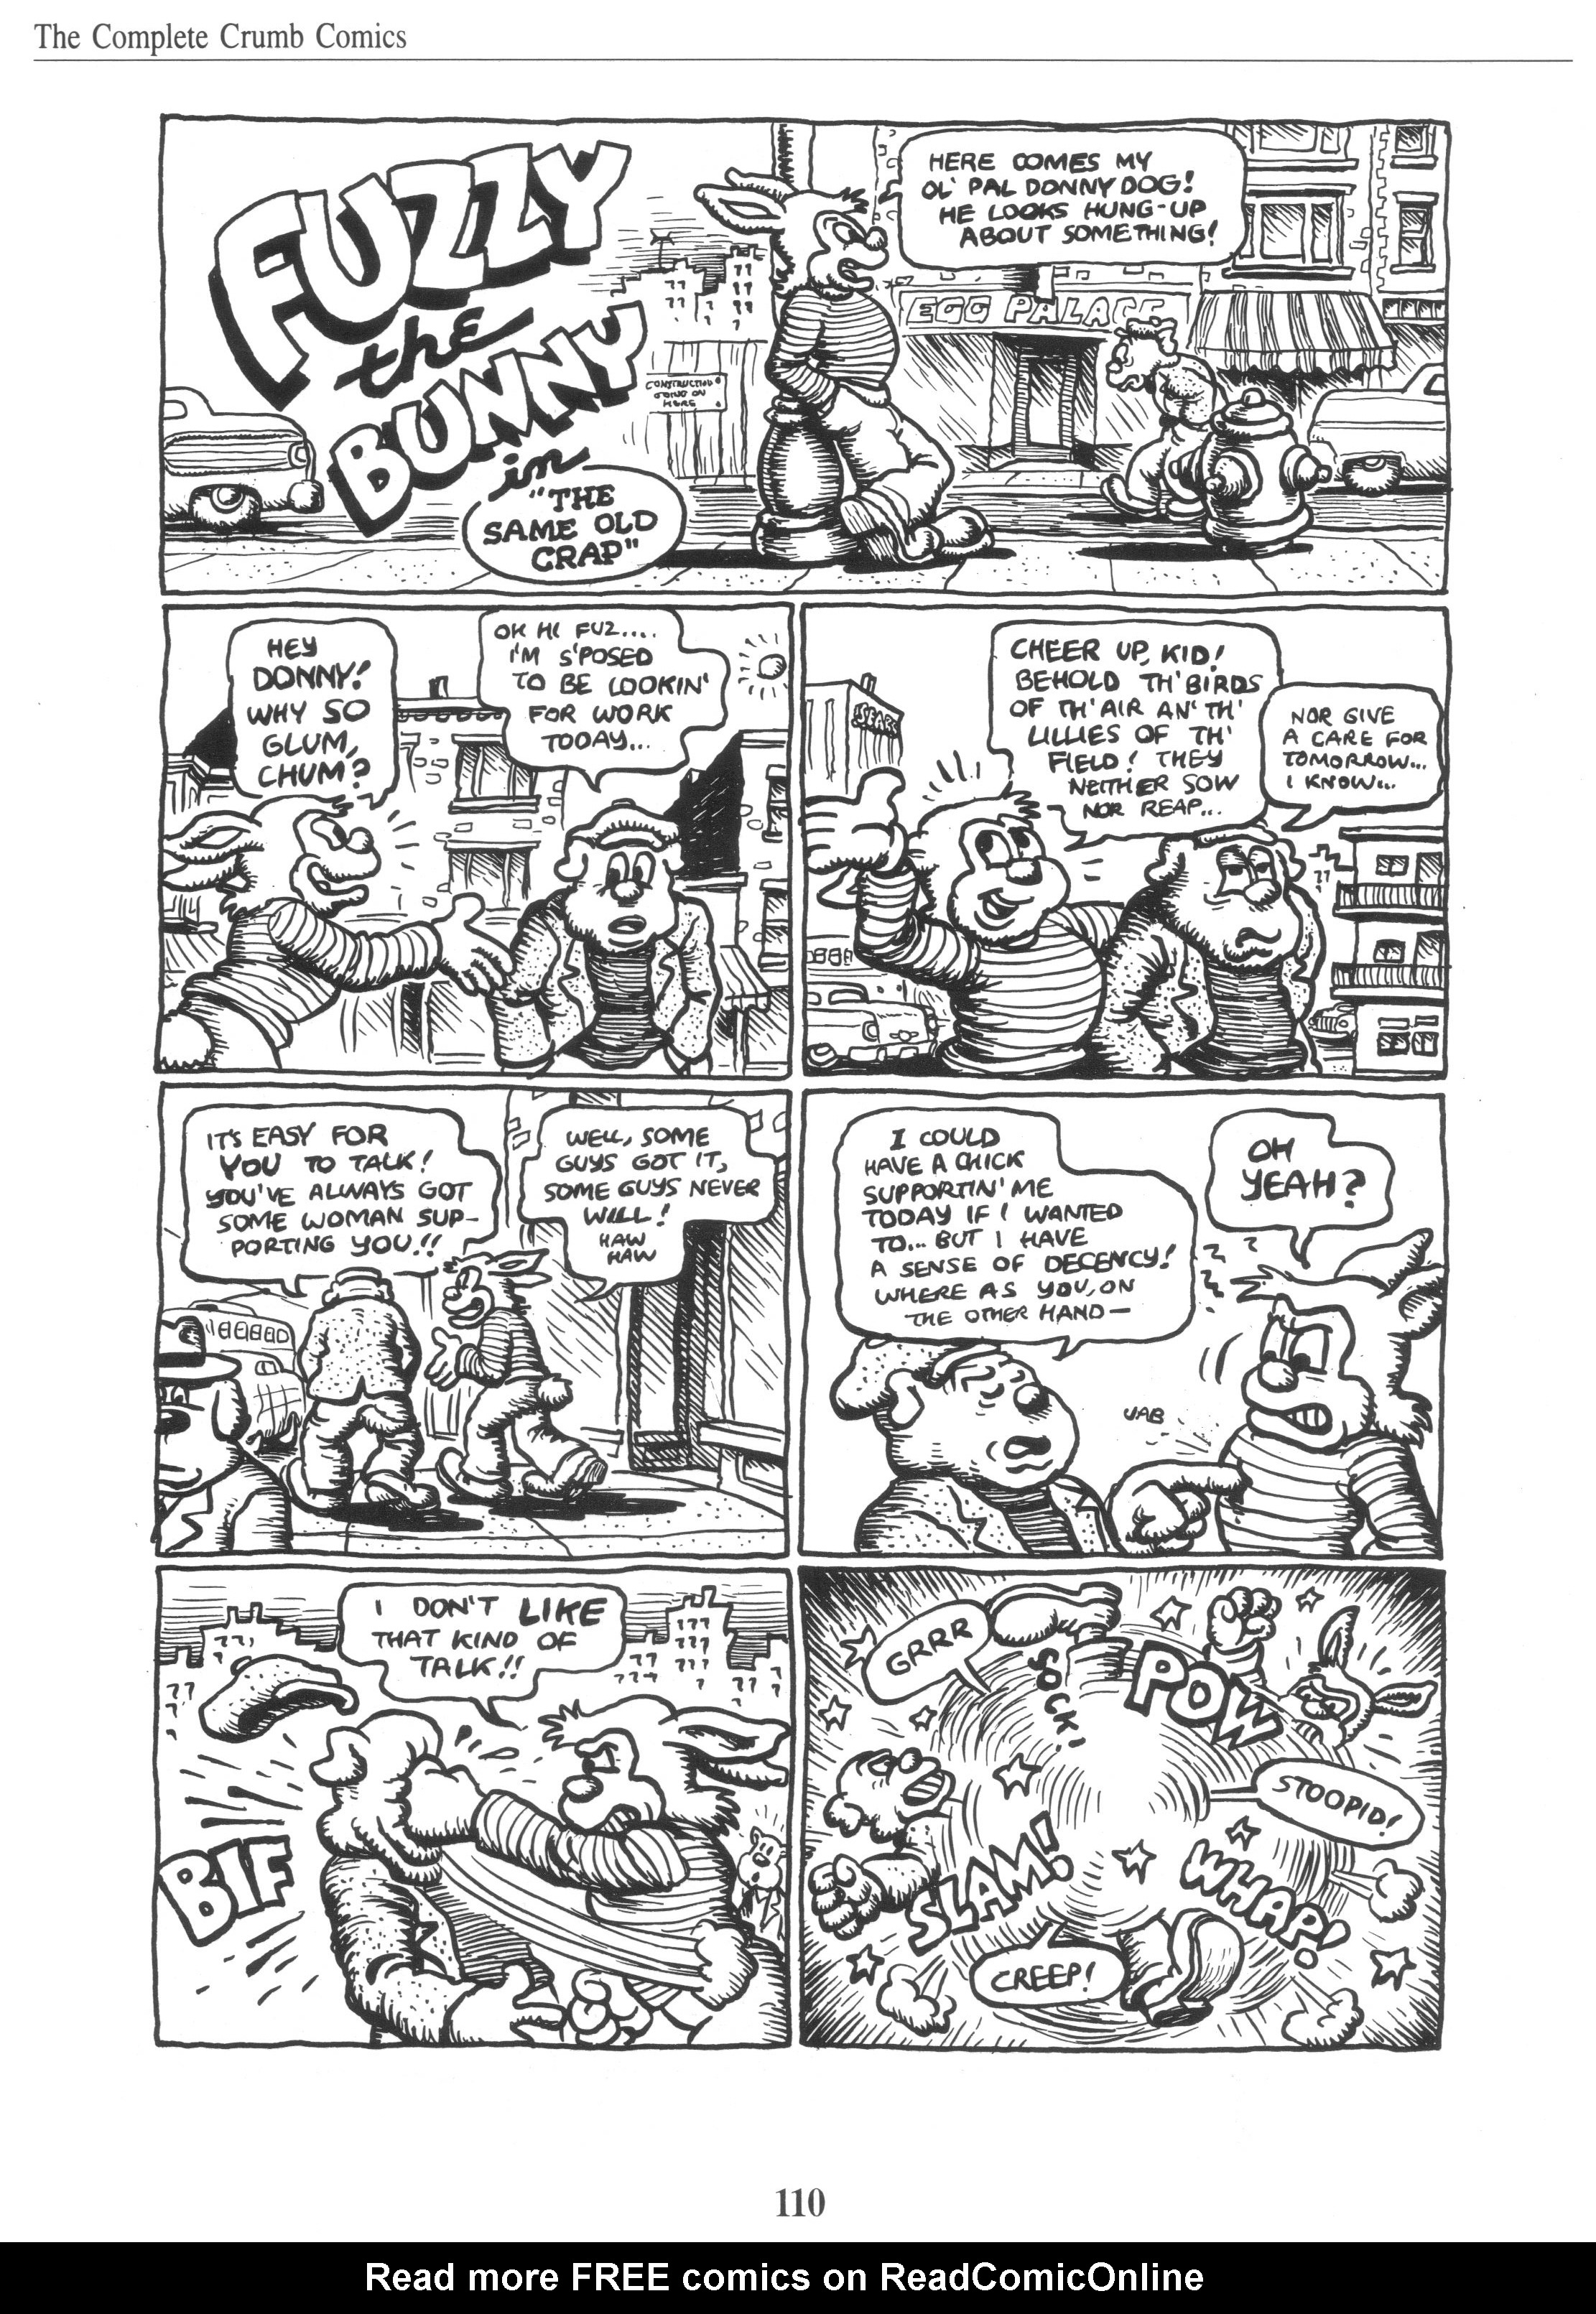 Read online The Complete Crumb Comics comic -  Issue # TPB 6 - 120